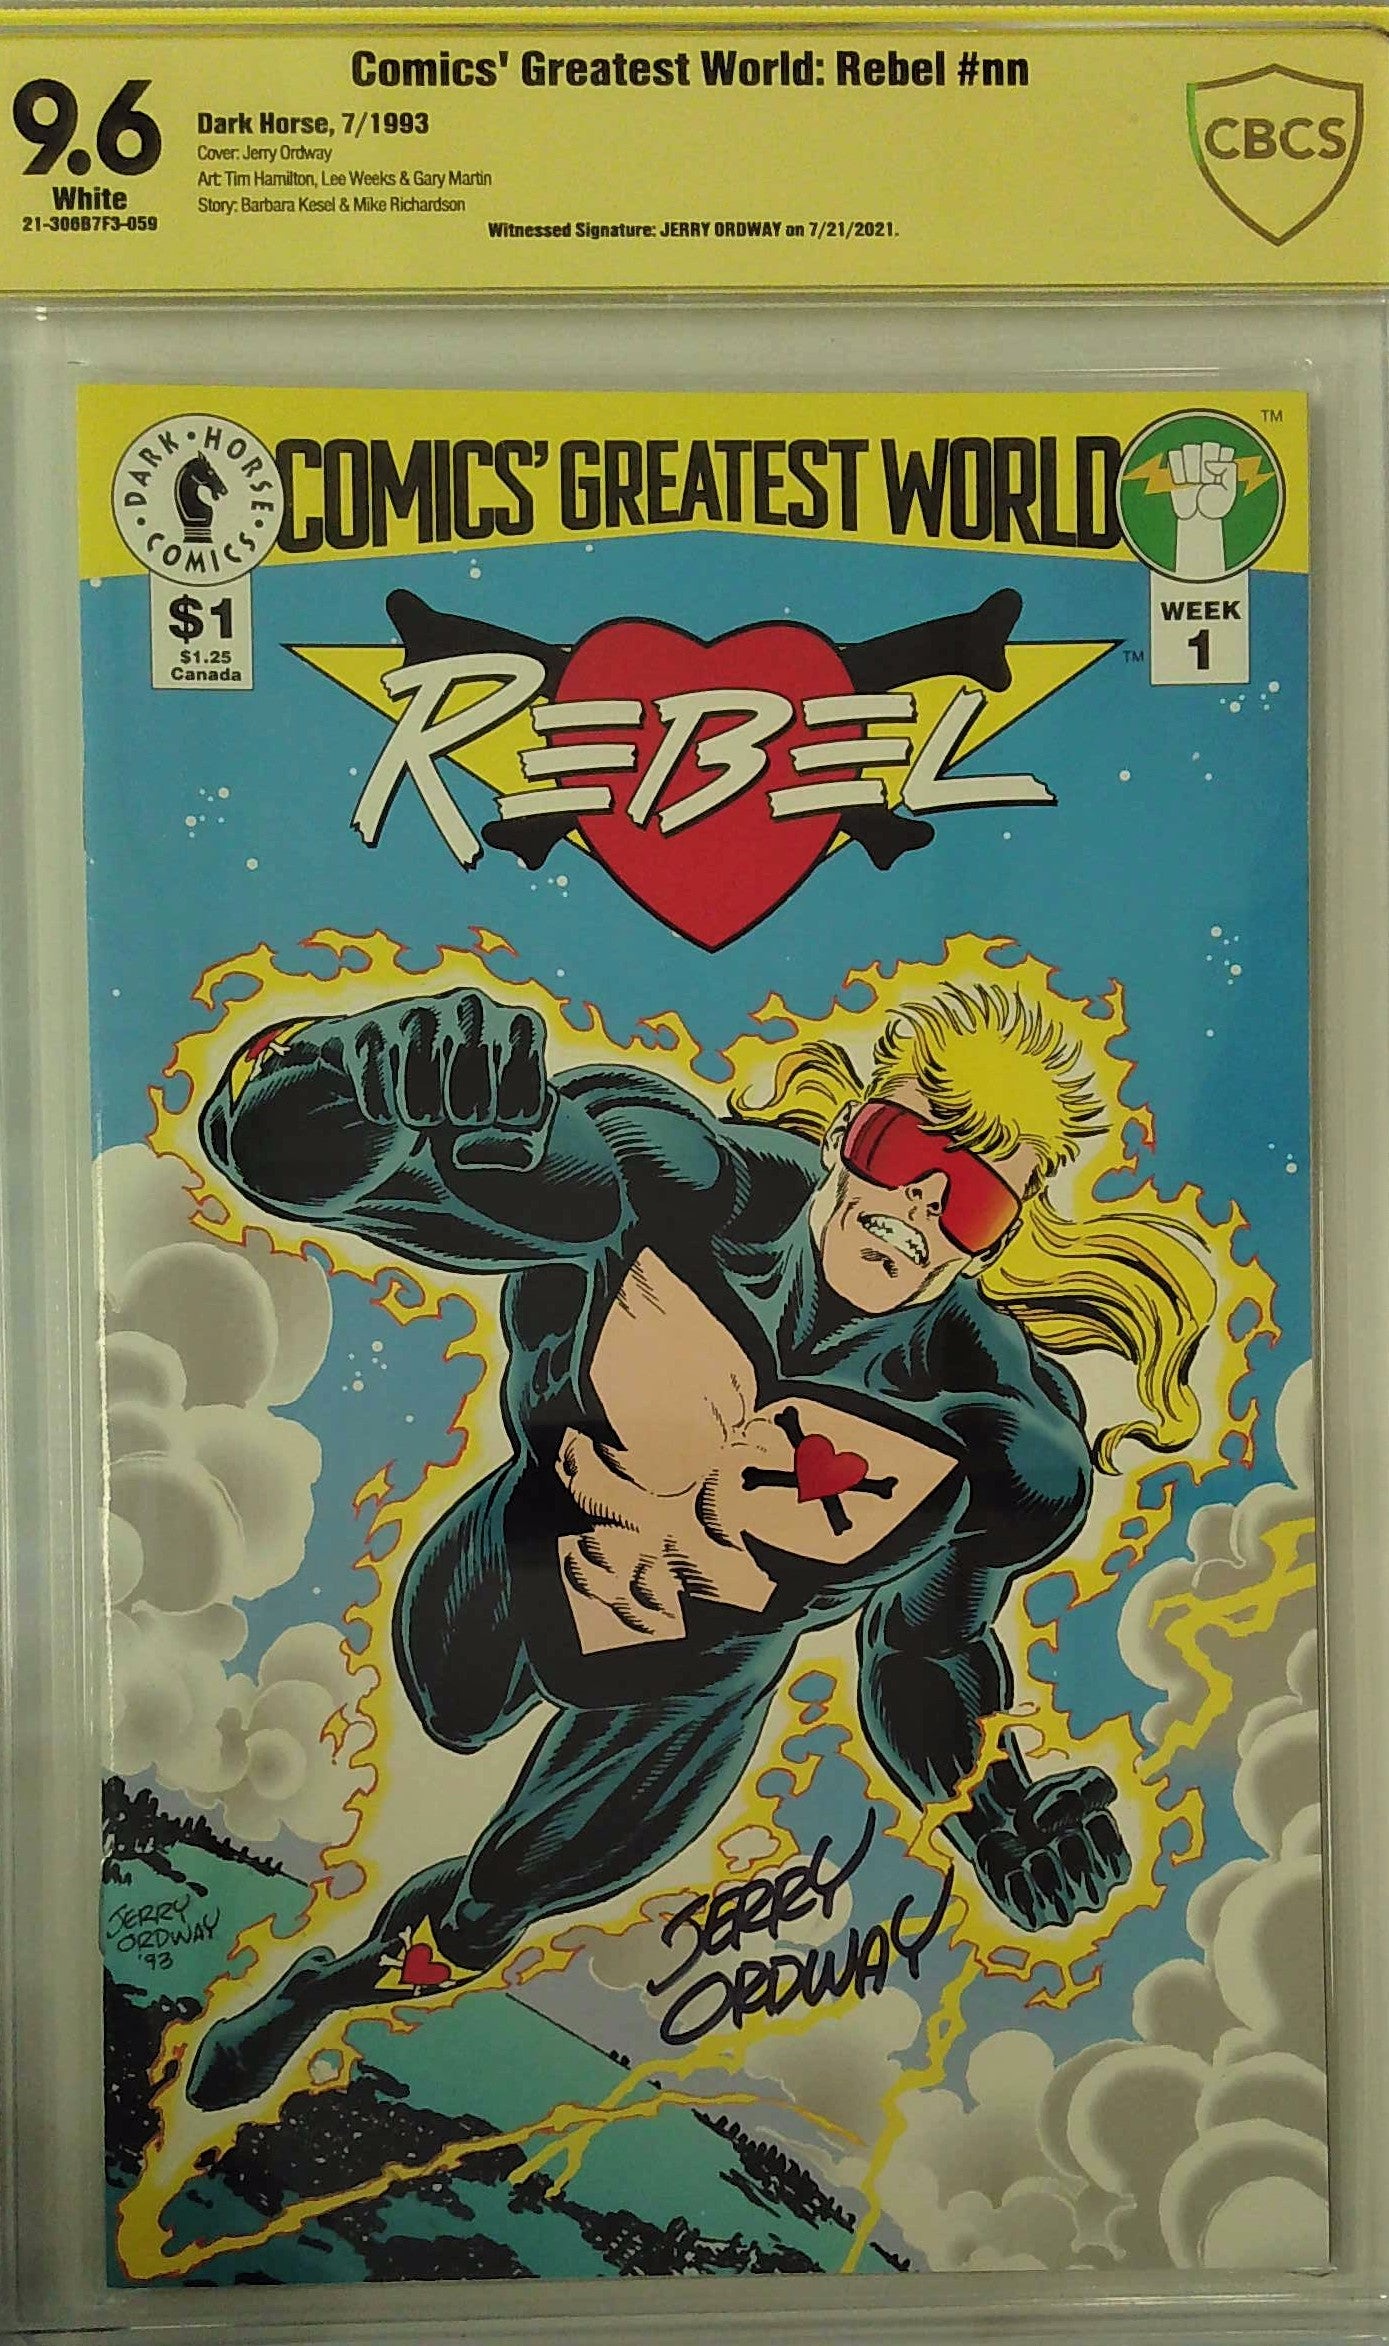 Comics' Greatest World: Rebel #nn CBCS 9.6 Yellow Label Jerry Ordway